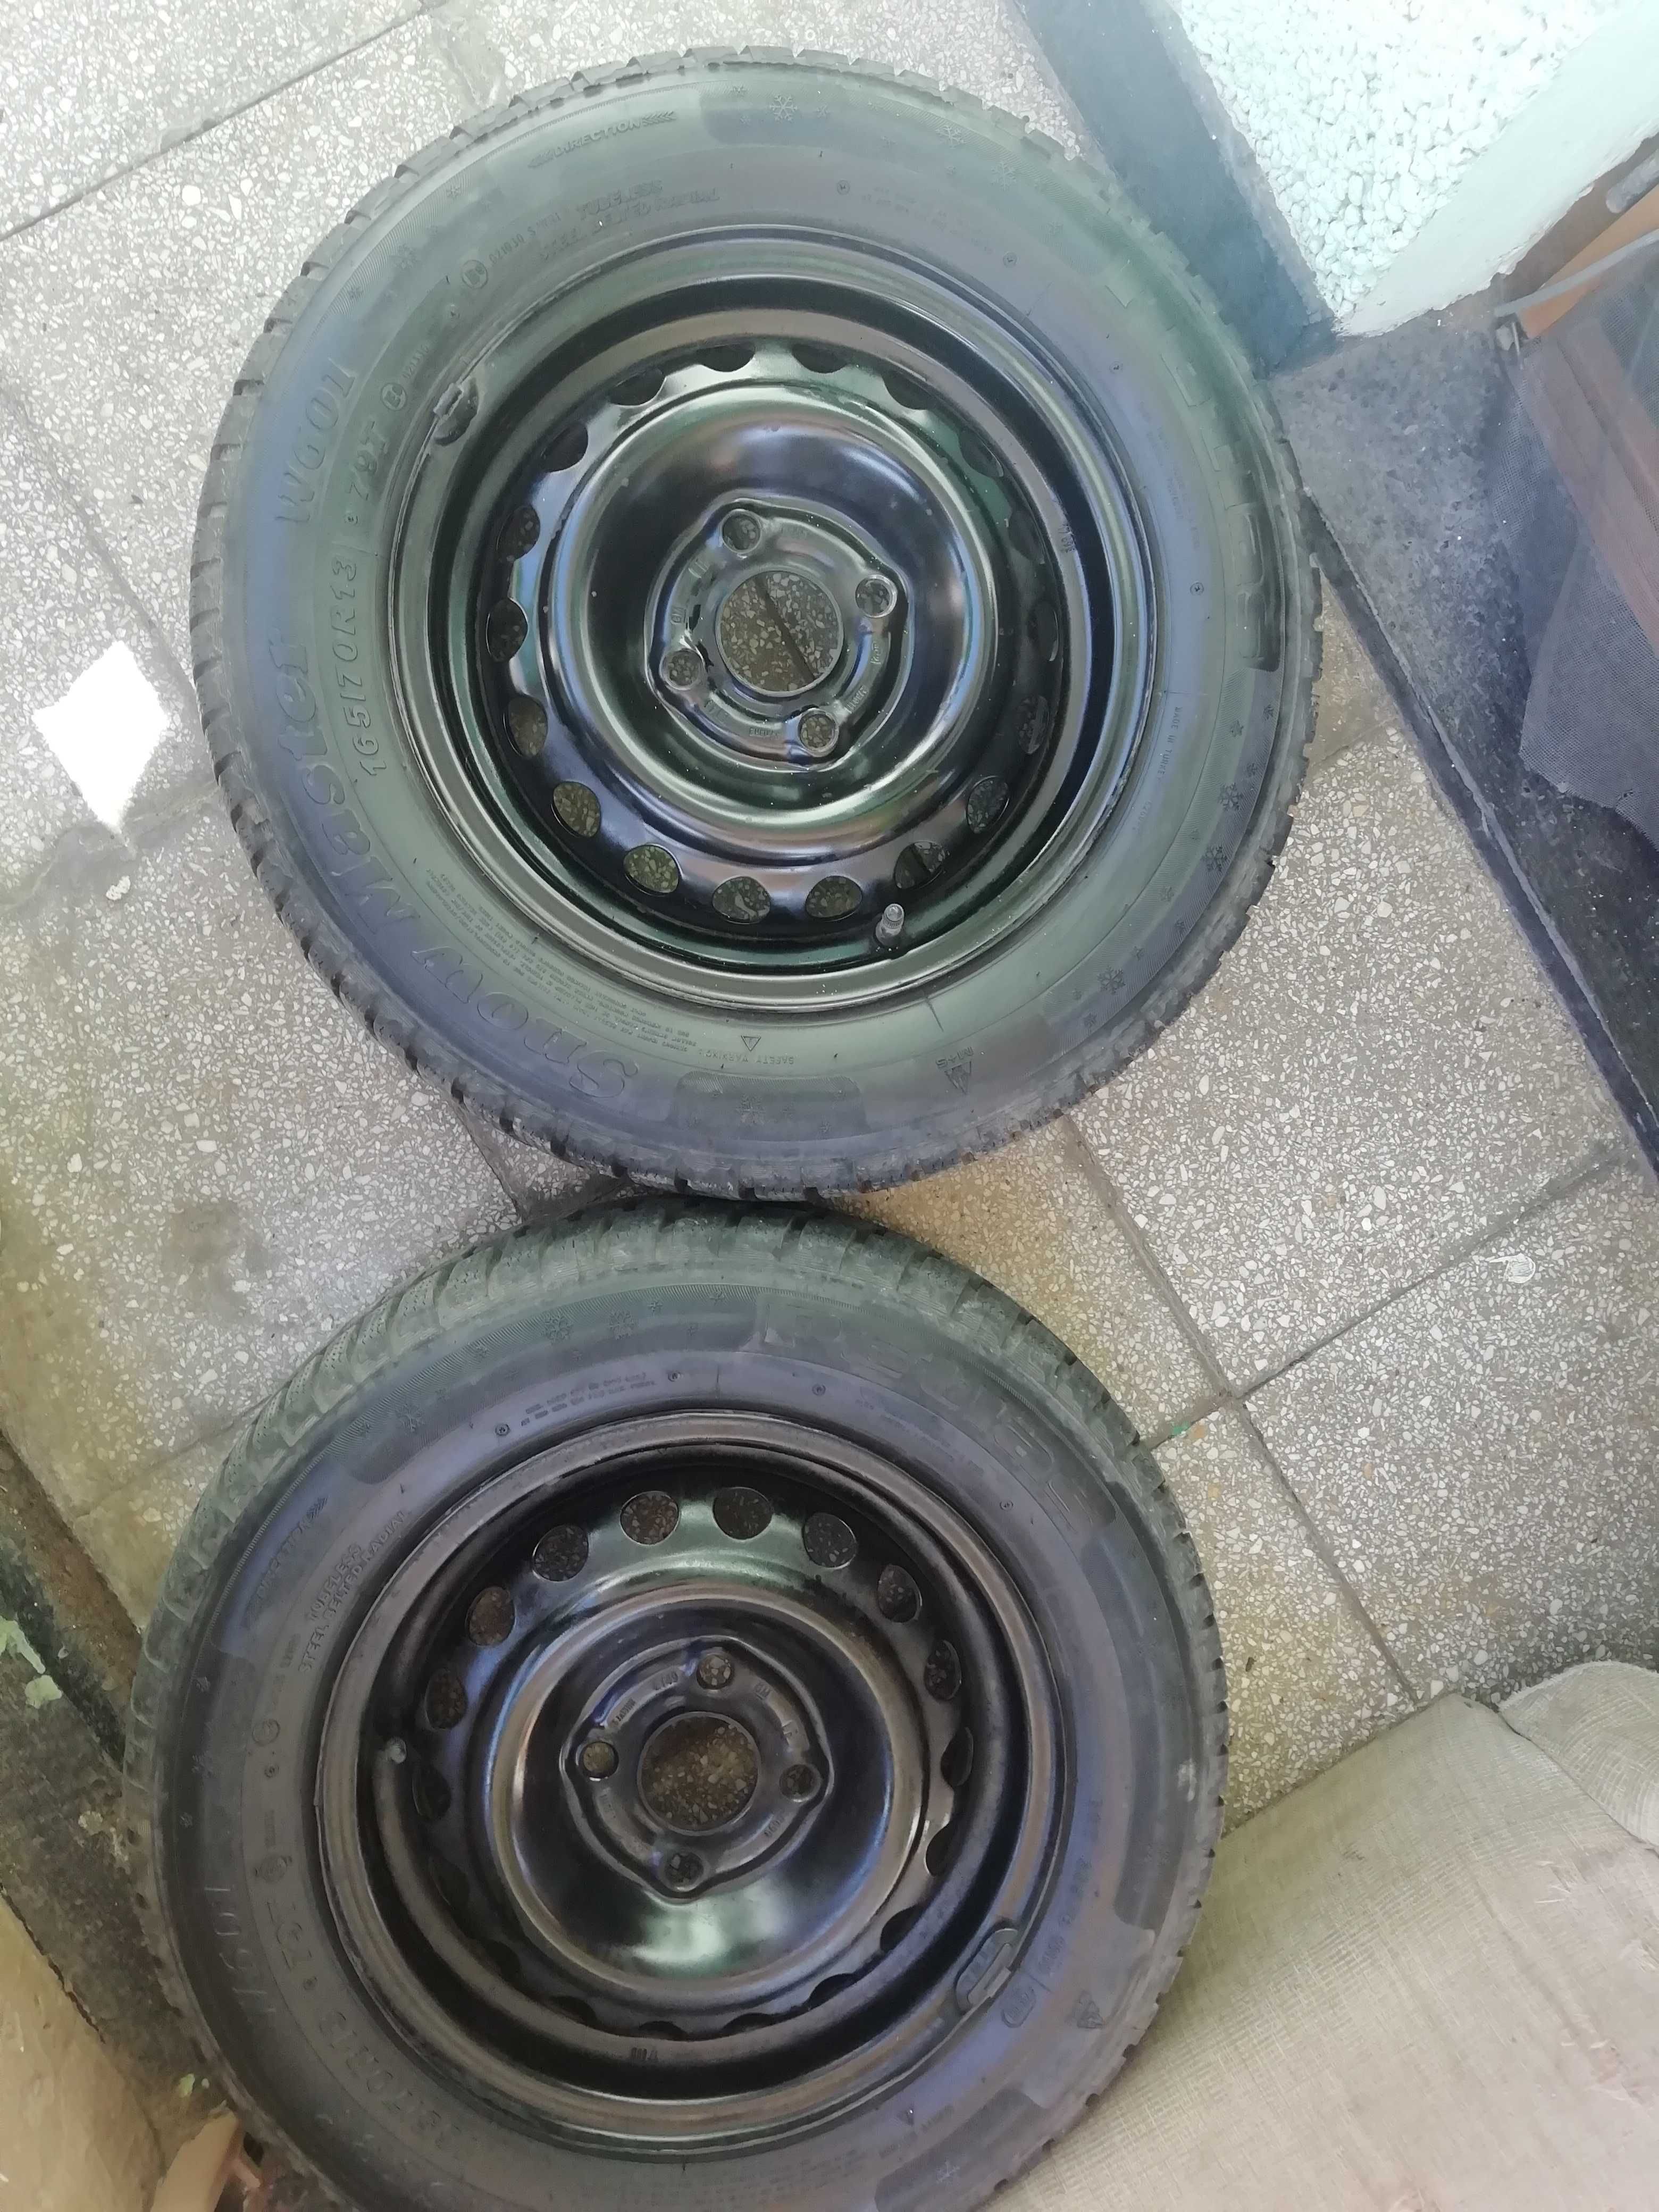 Автомобилни гуми